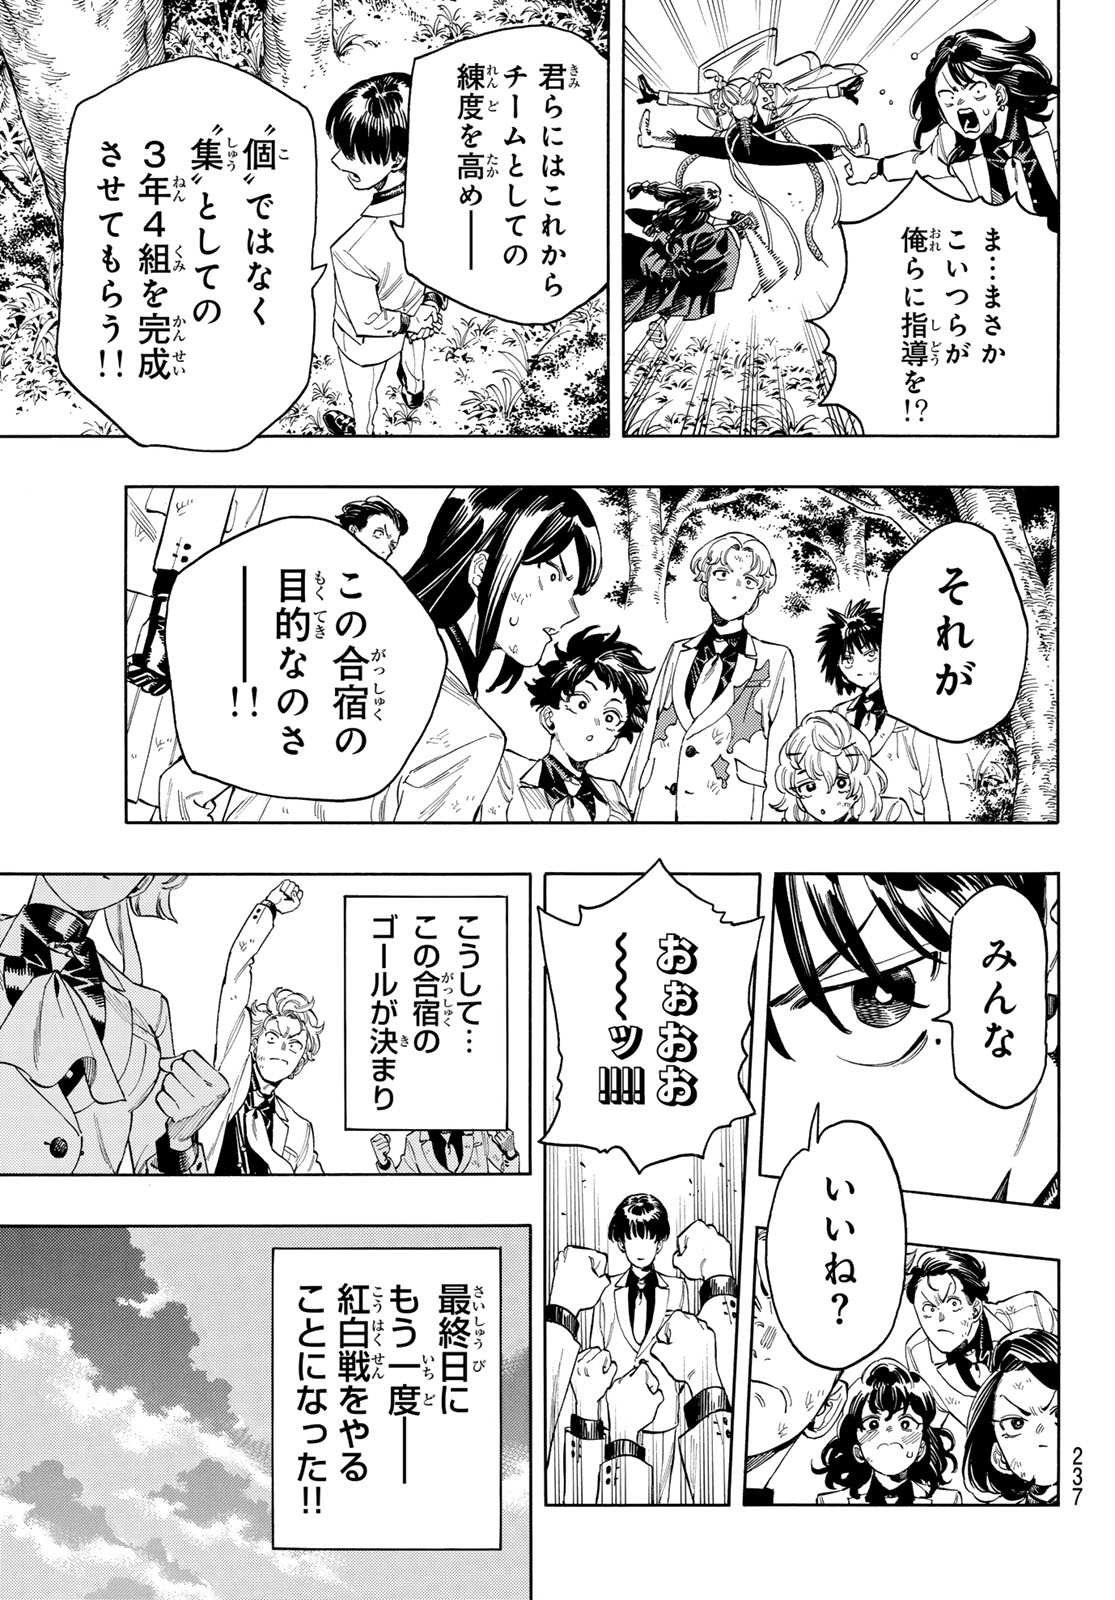 Akabane Honeko no Bodyguard - Chapter 86 - Page 17